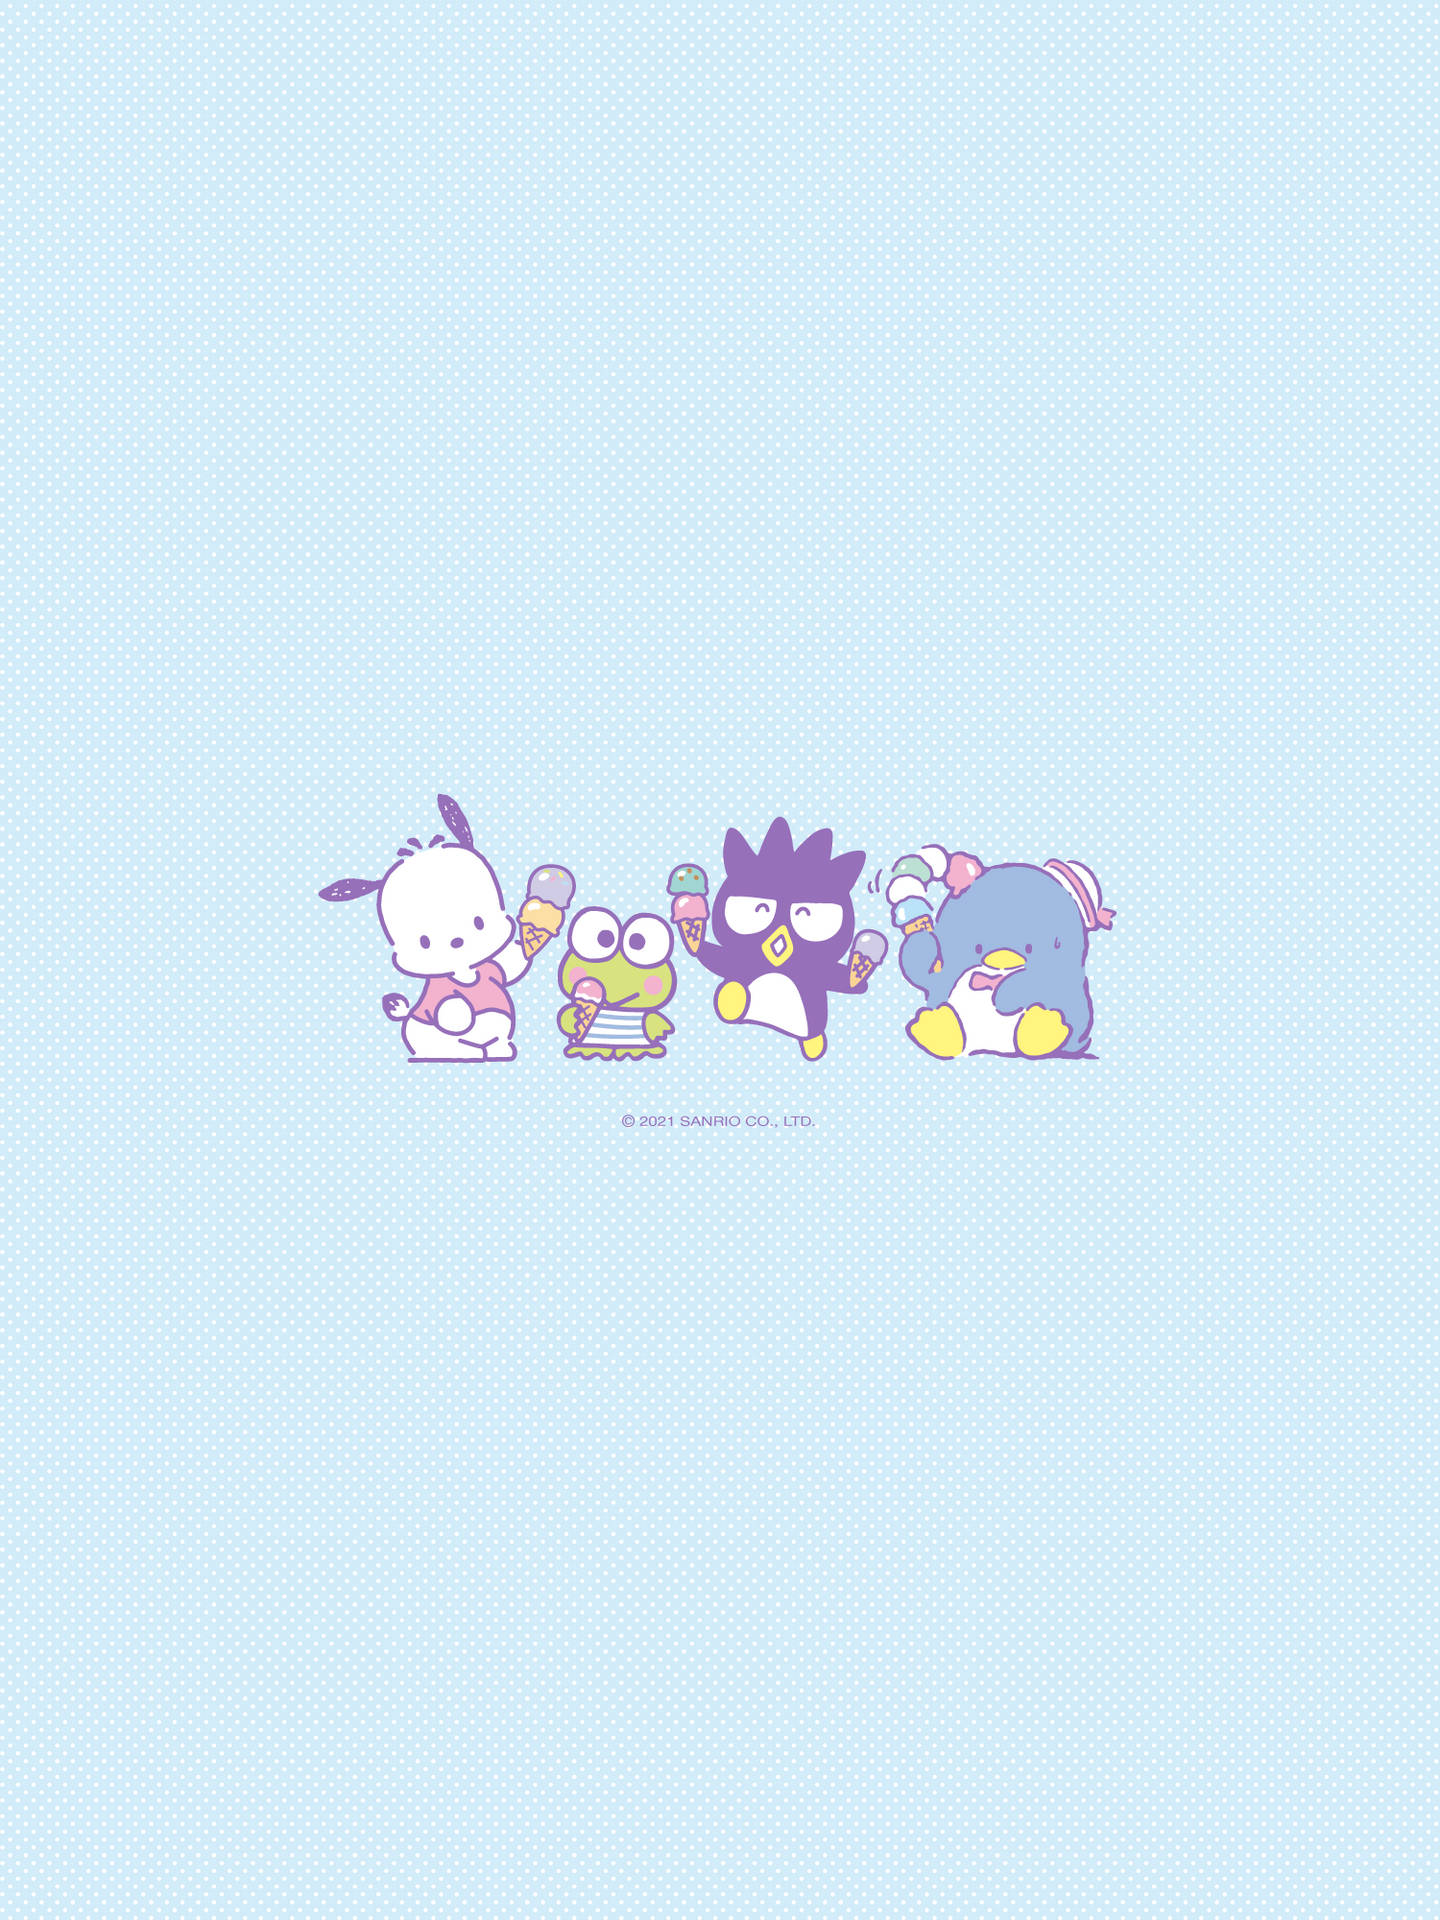 Badtz Maru Ice Cream Sanrio Friends Wallpaper